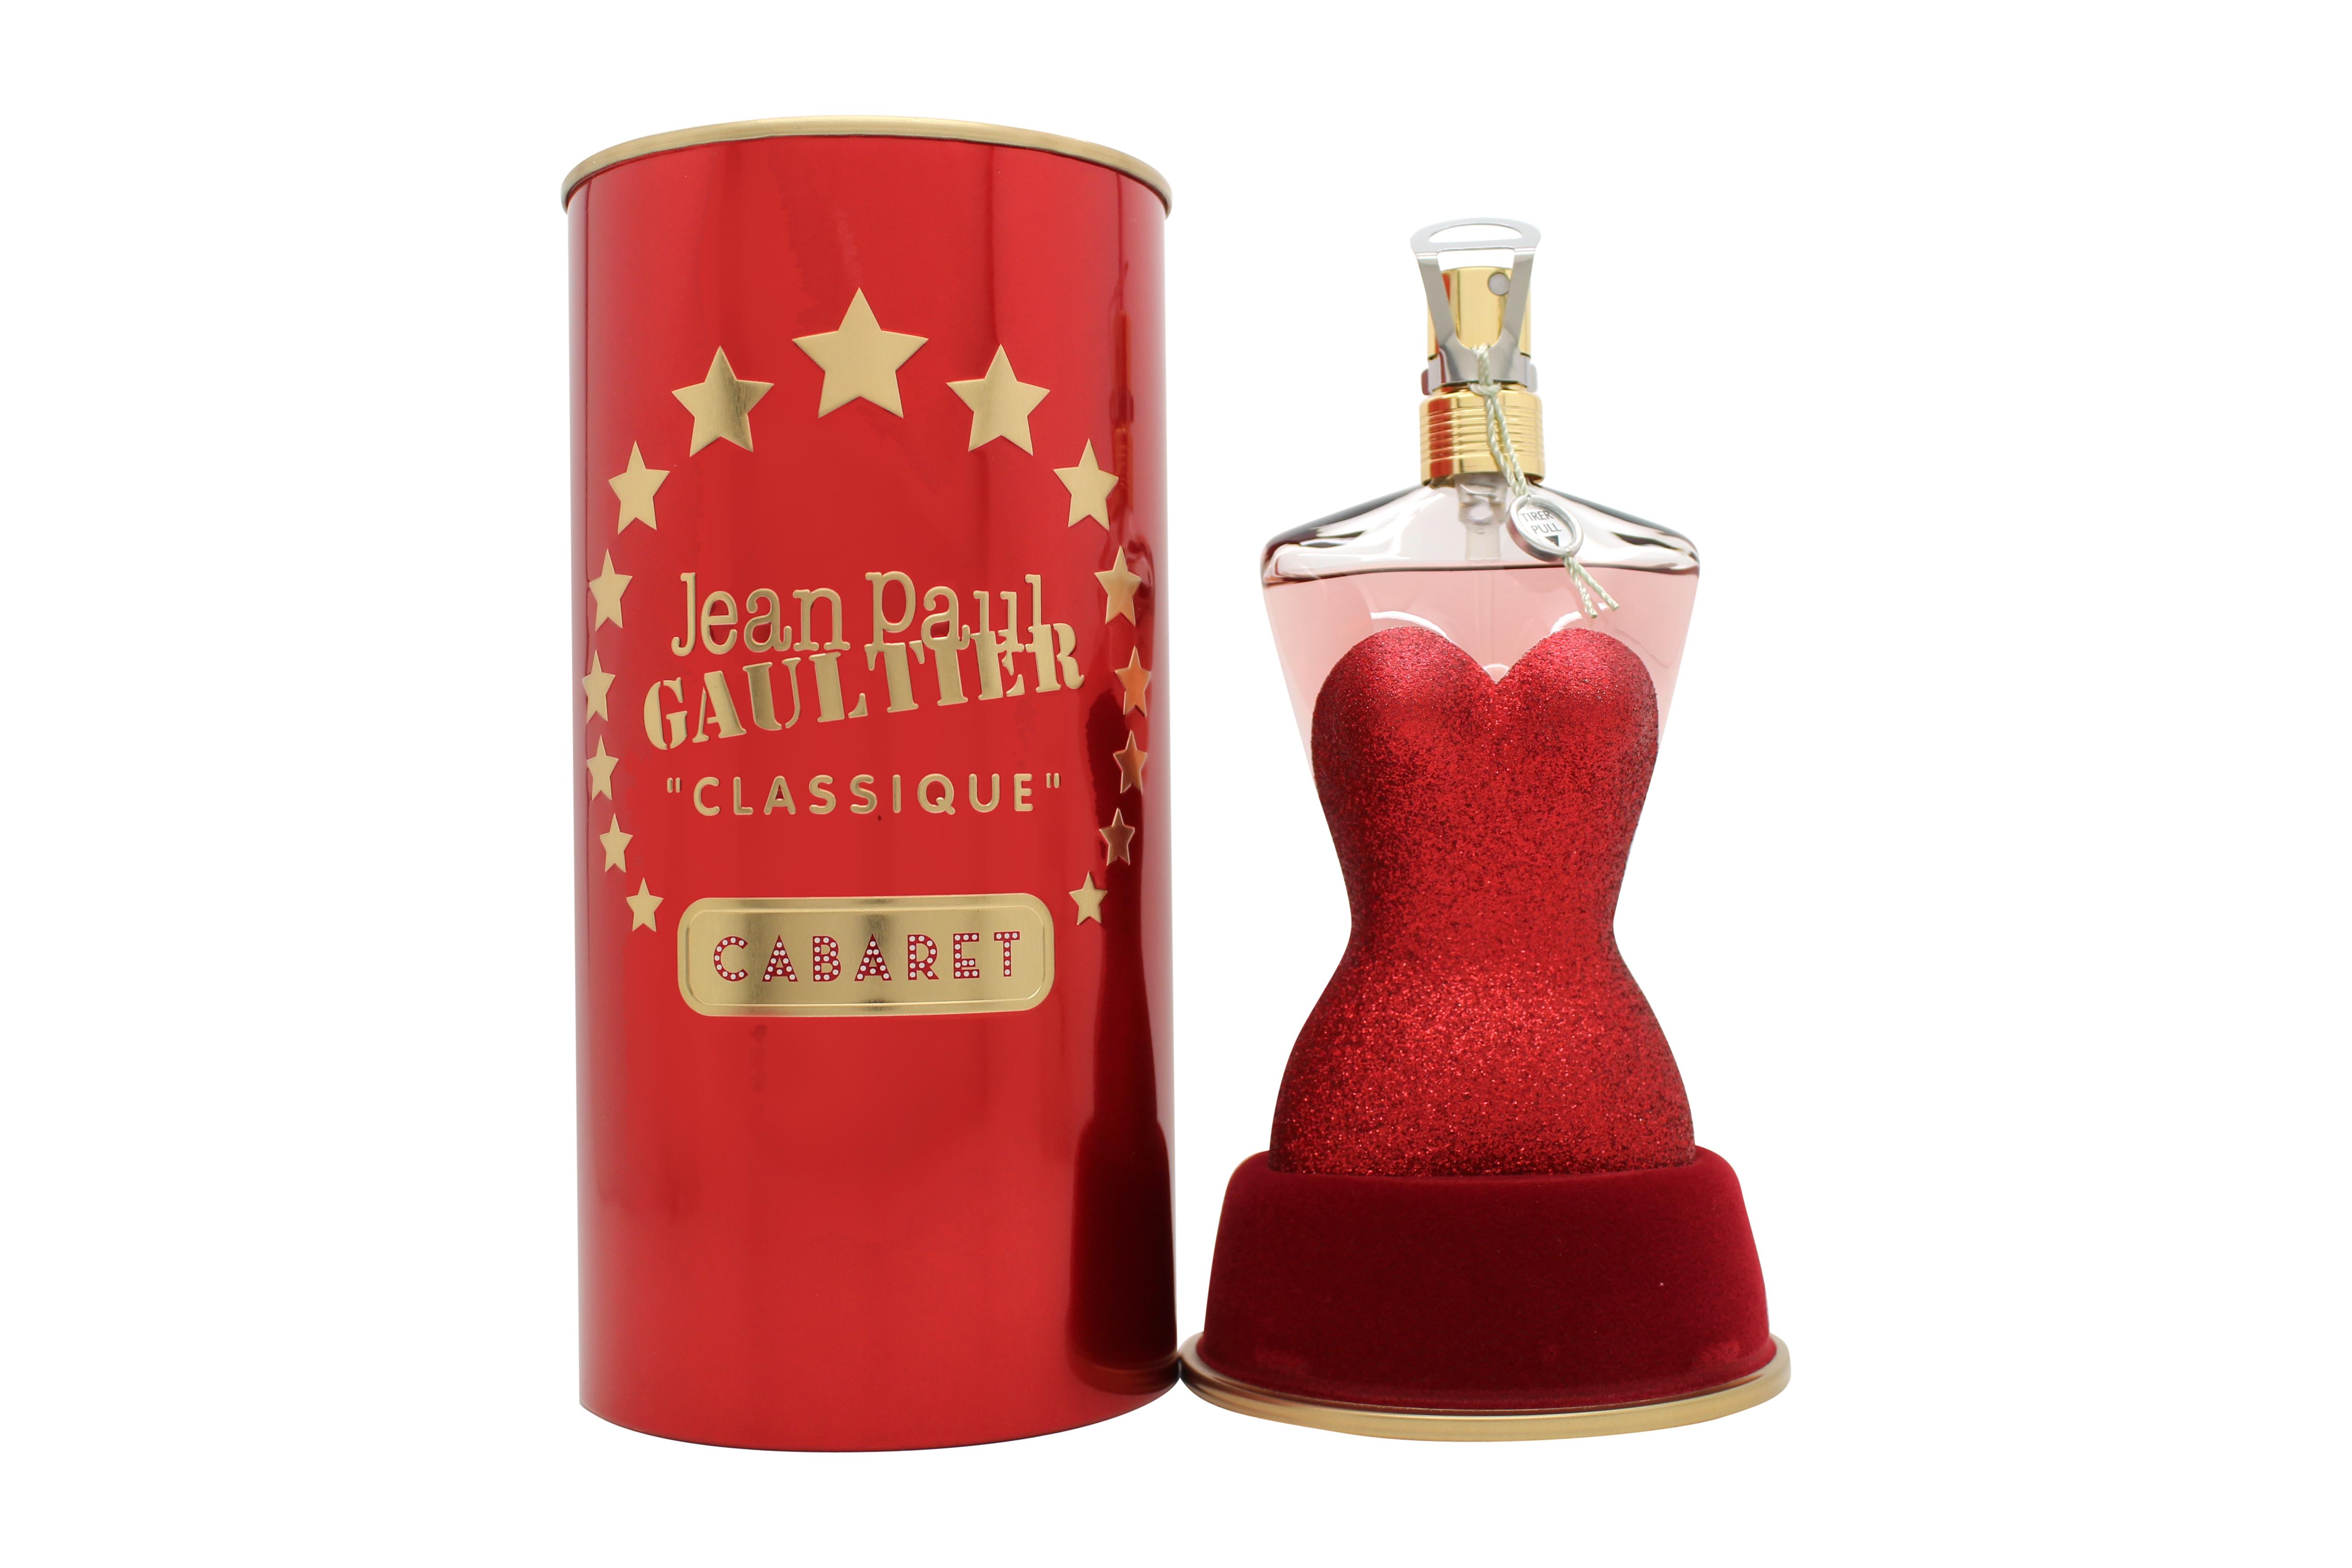 Jean Paul Gaultier Classique Cabaret Eau de Parfum 100ml Spray